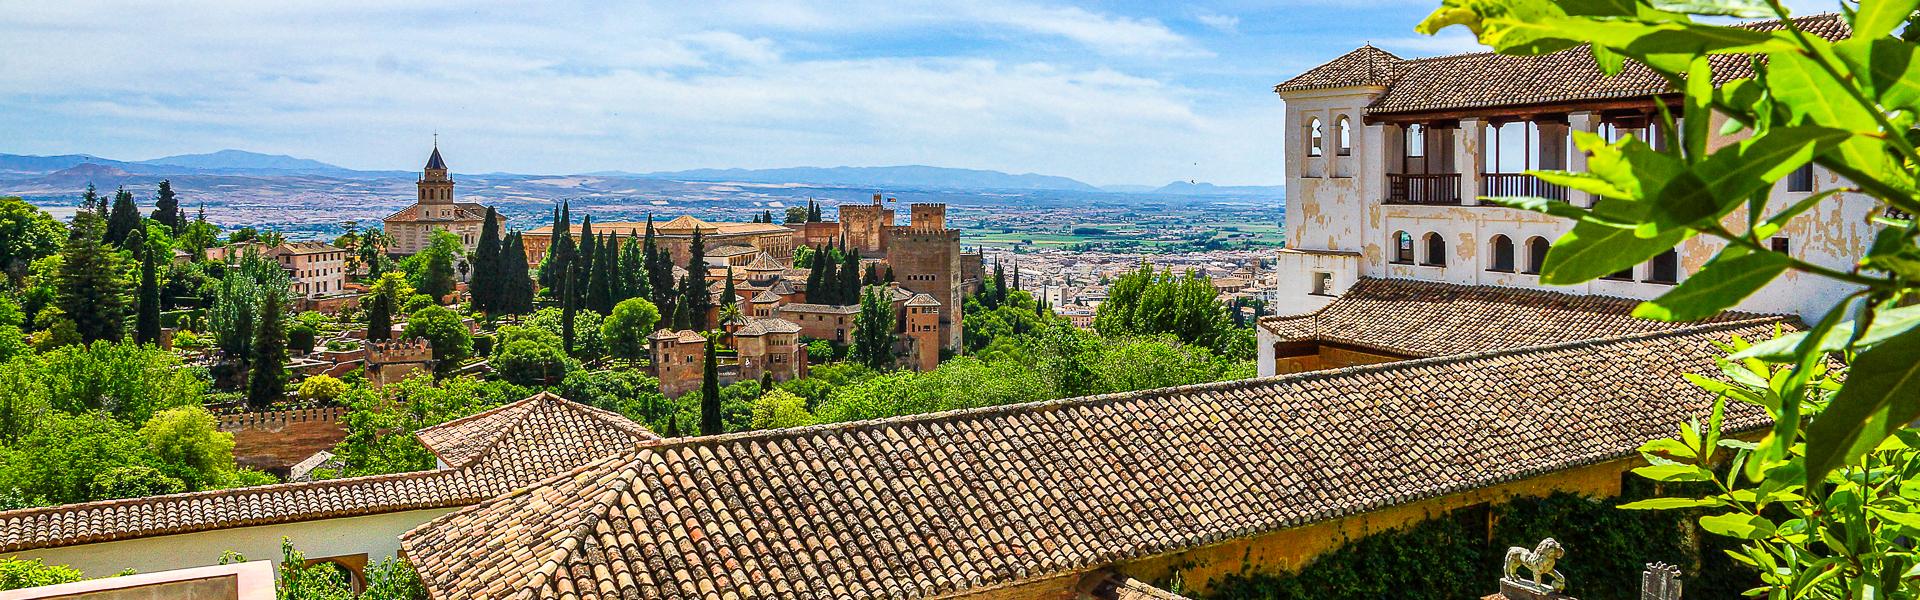 Blick auf die Alhambra |  Frank Nrnberger, Pixabay / Chamleon